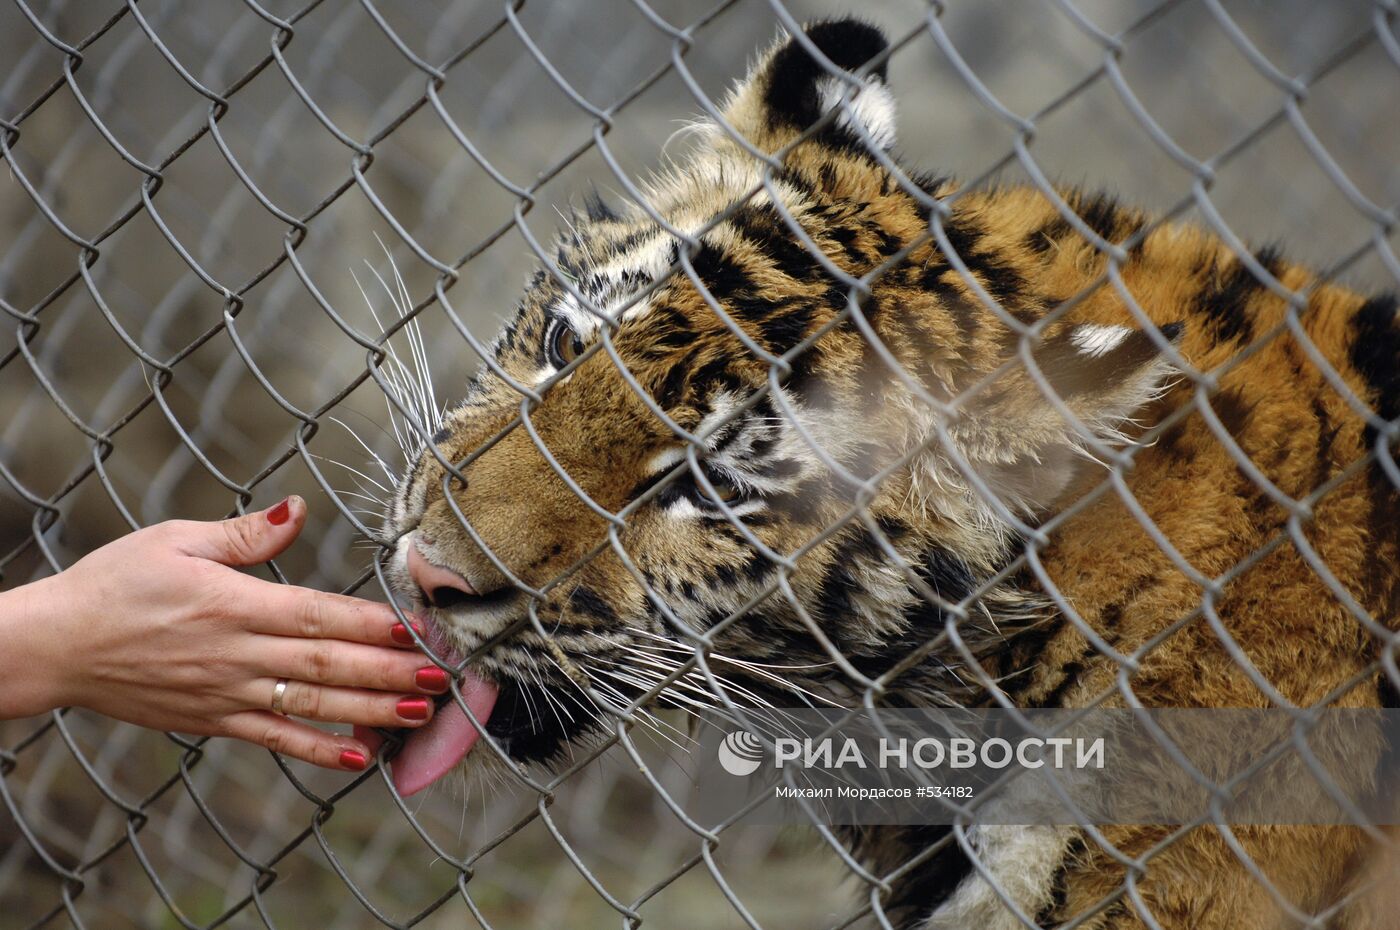 Тигрица Маша, подаренная Владимиру Путину